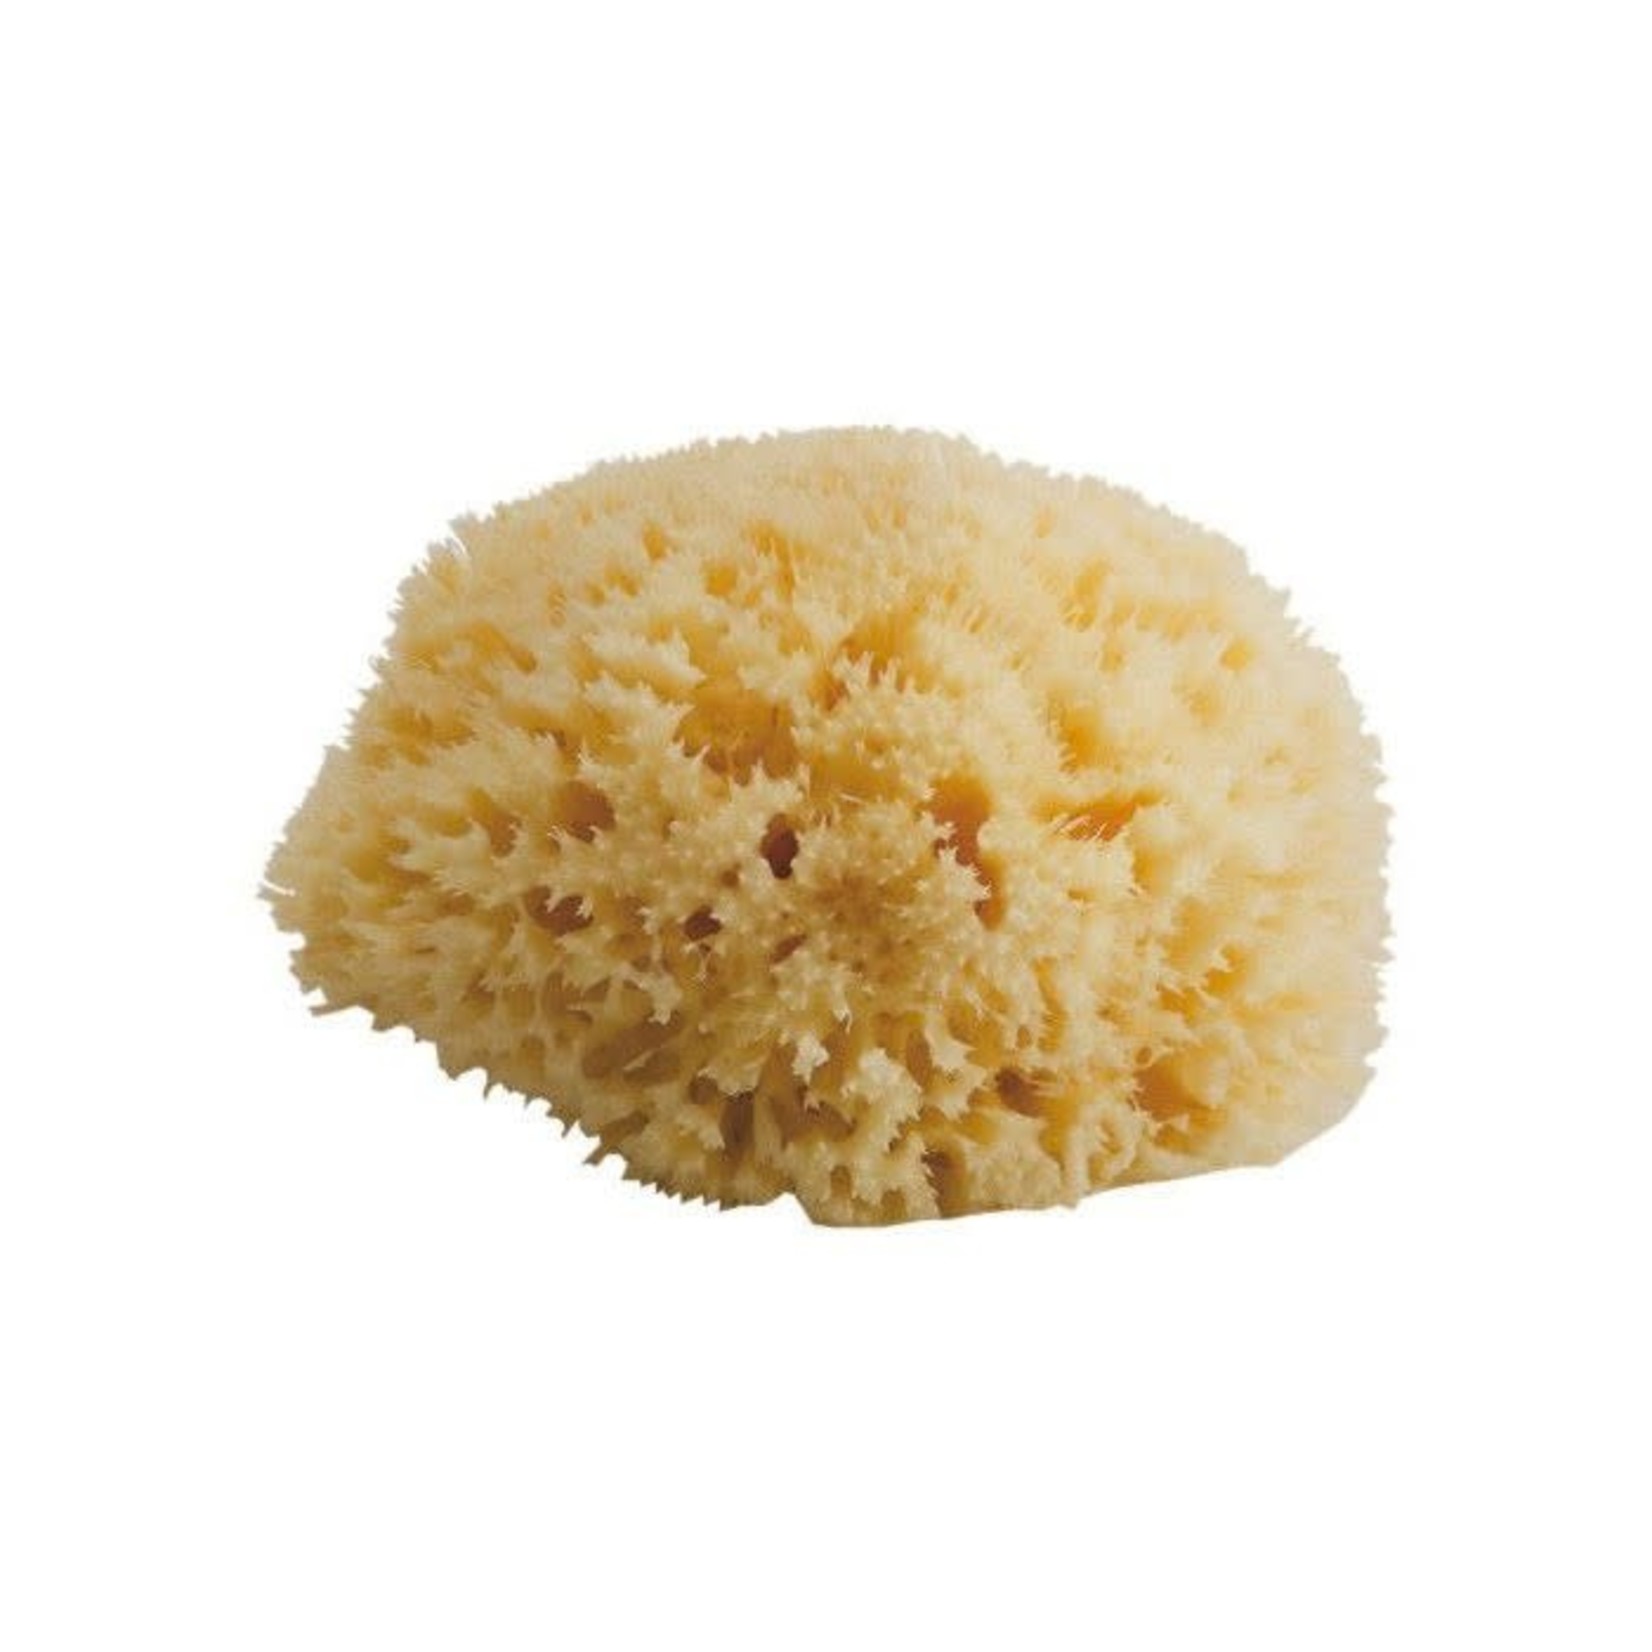 Bellini sea sponge